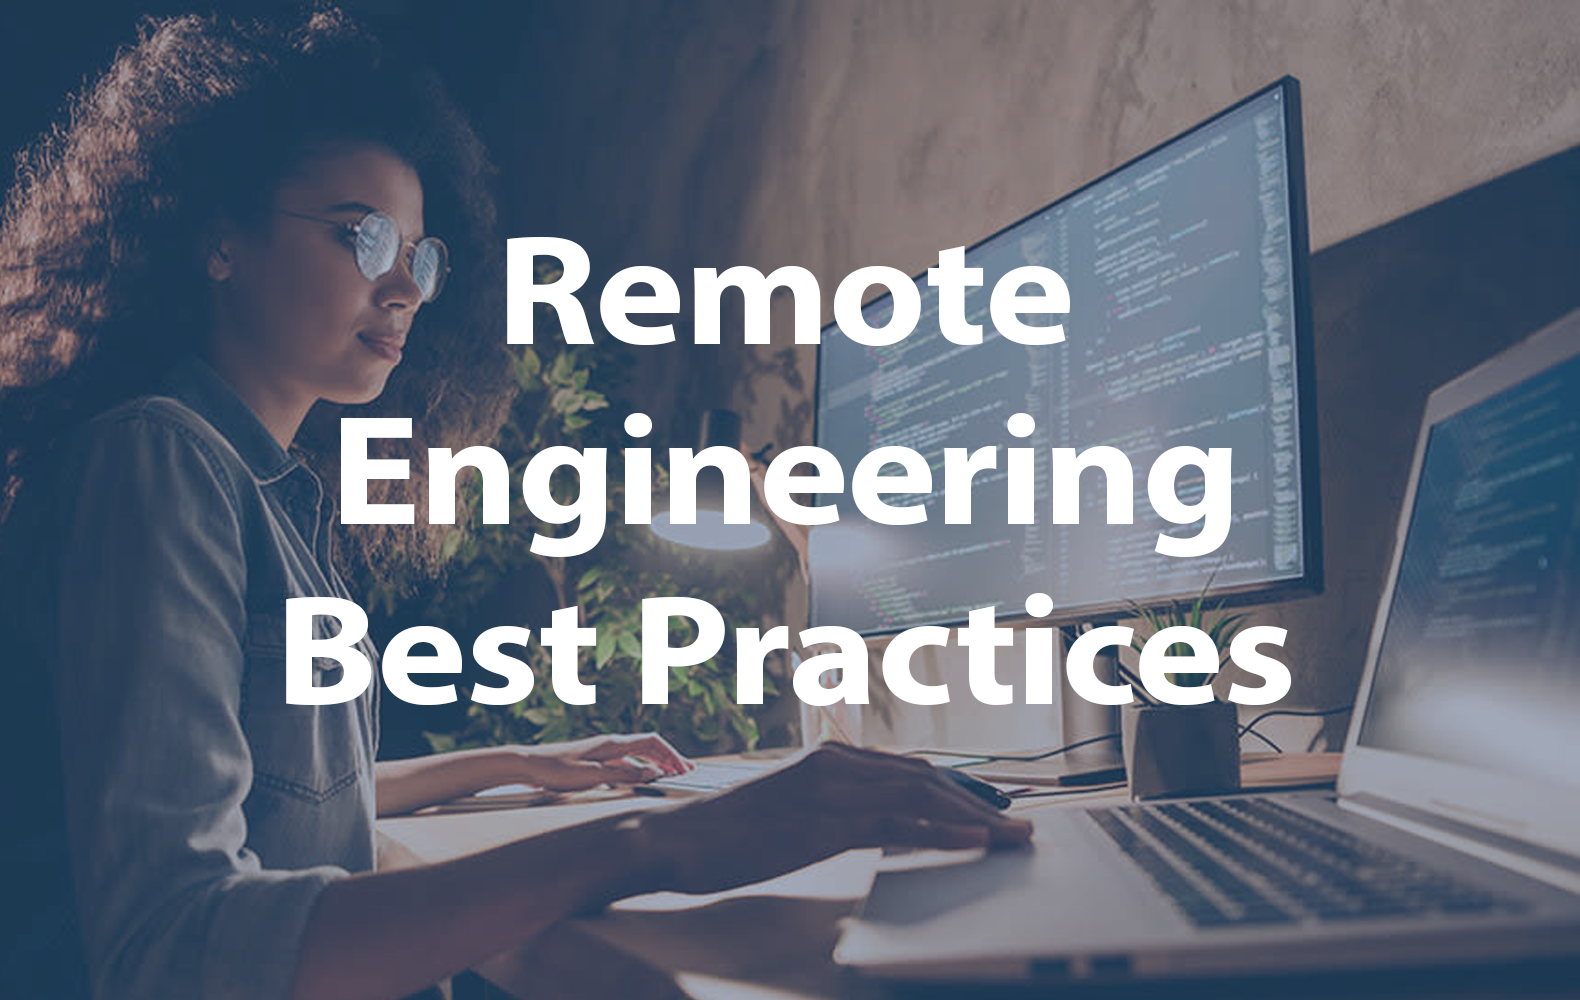 Remote engineering best practices